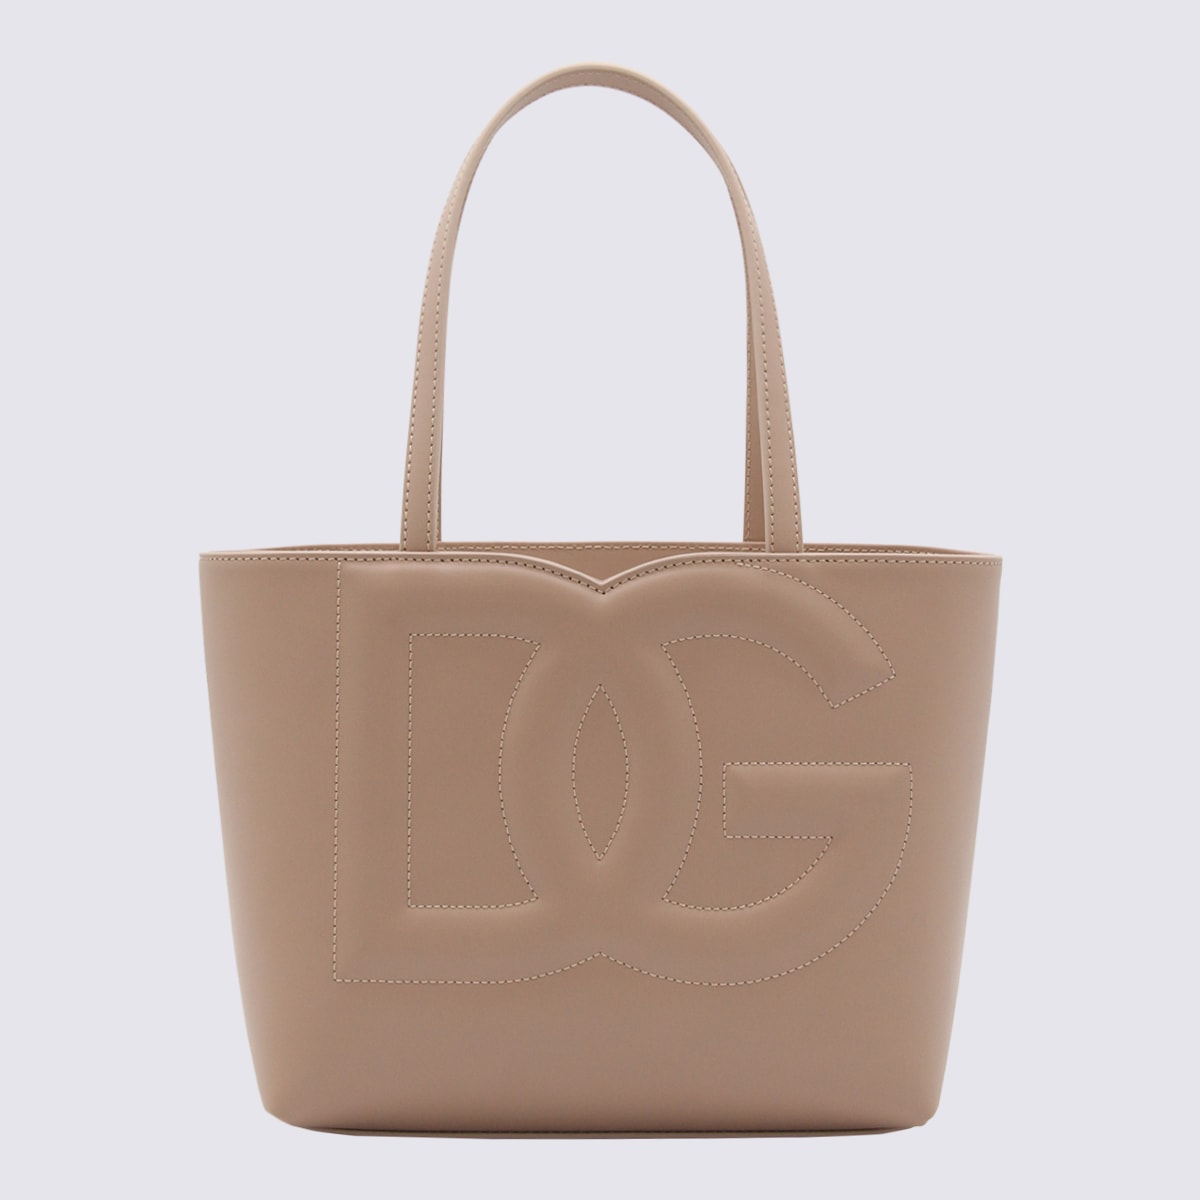 Dolce & Gabbana Powder Pink Leather Tote Bag